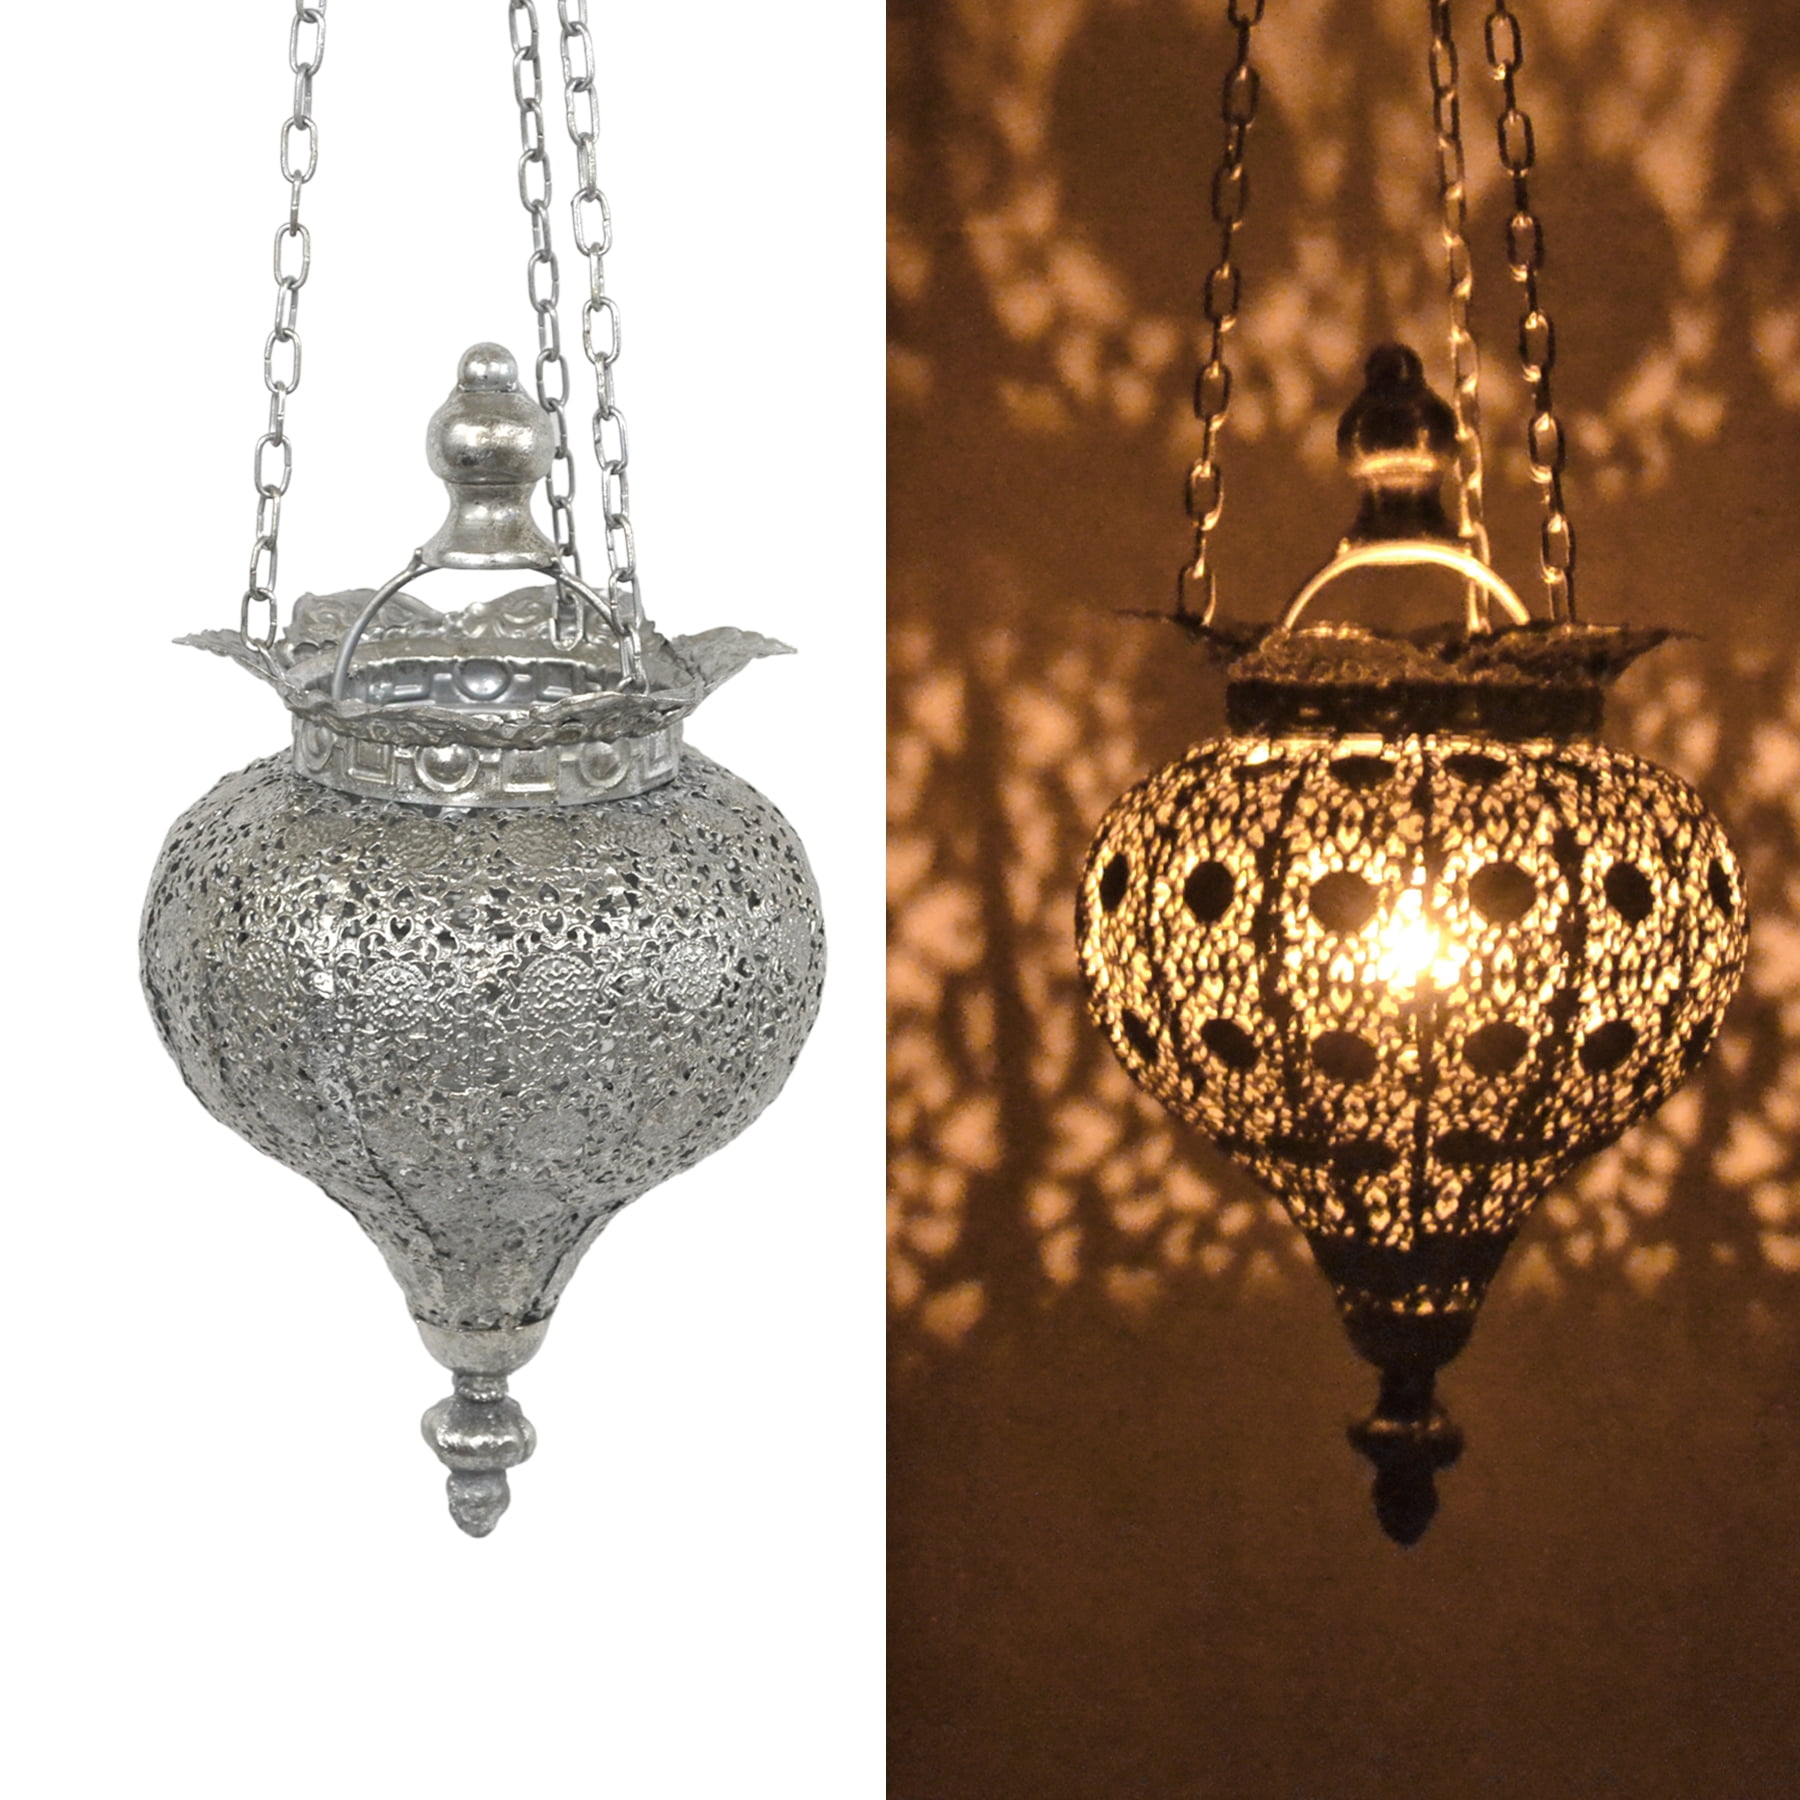 Westcharm Antique Silver Oriental Moroccan Hanging Lantern Decorative - Metal Small Candle Pendant Ramadan Light